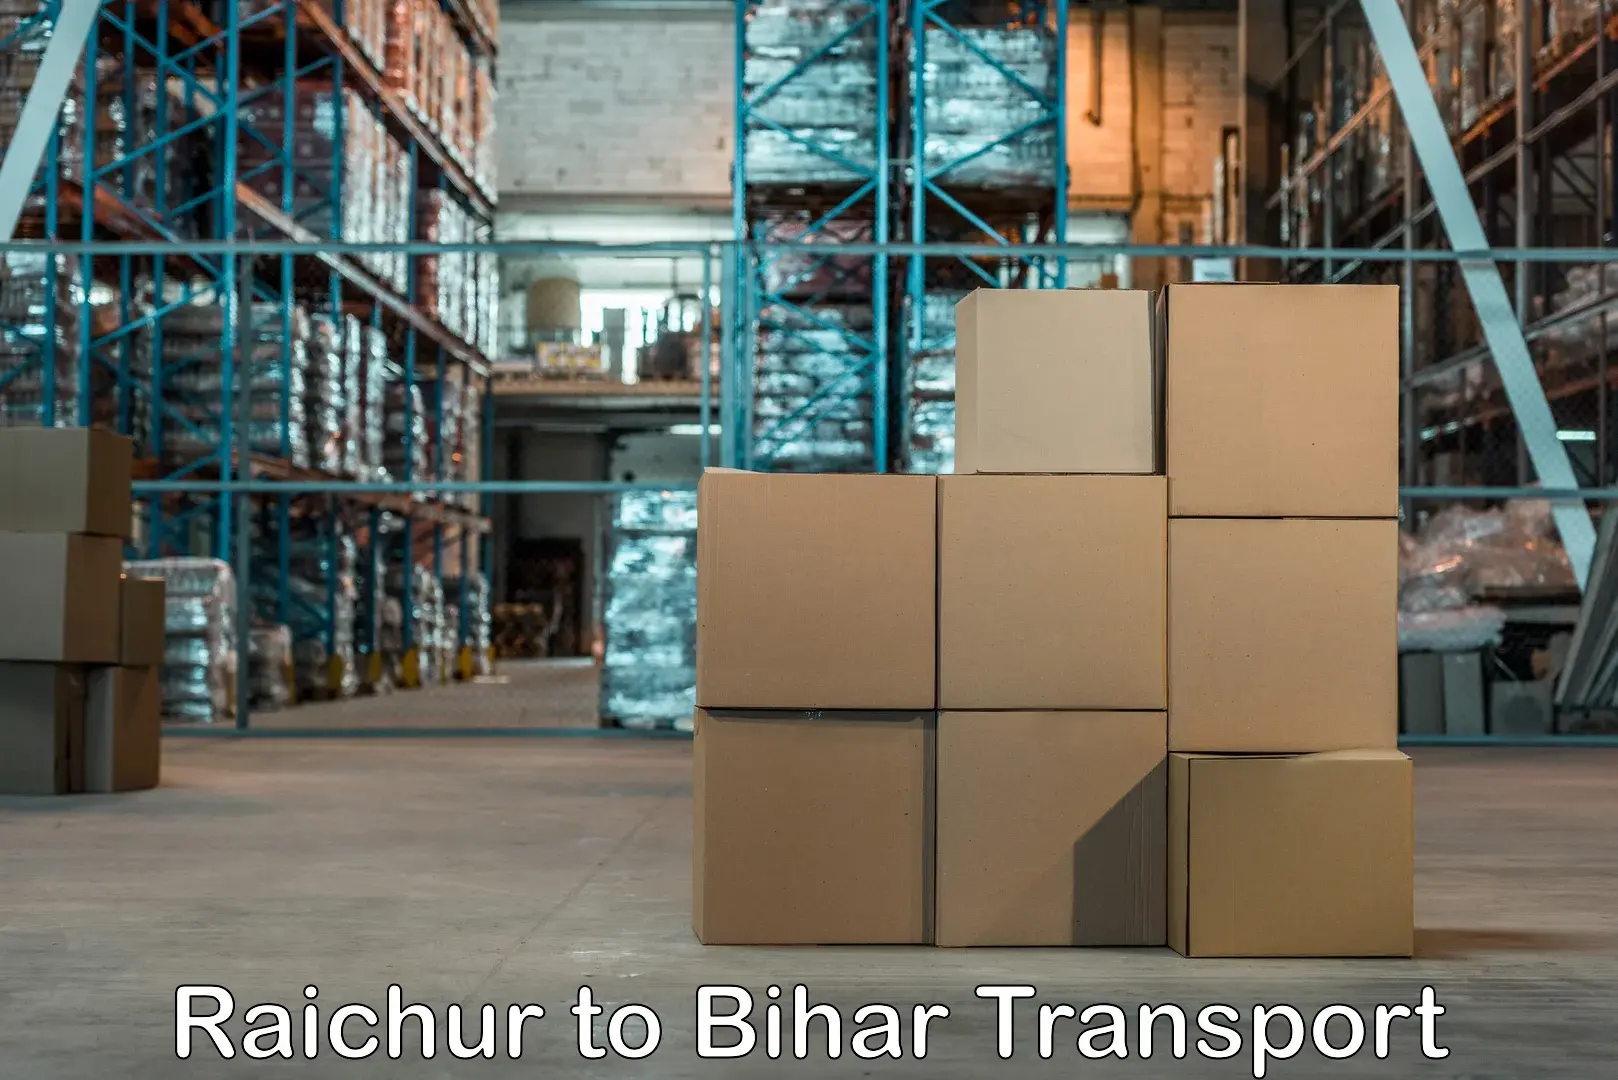 Truck transport companies in India Raichur to Aurangabad Bihar